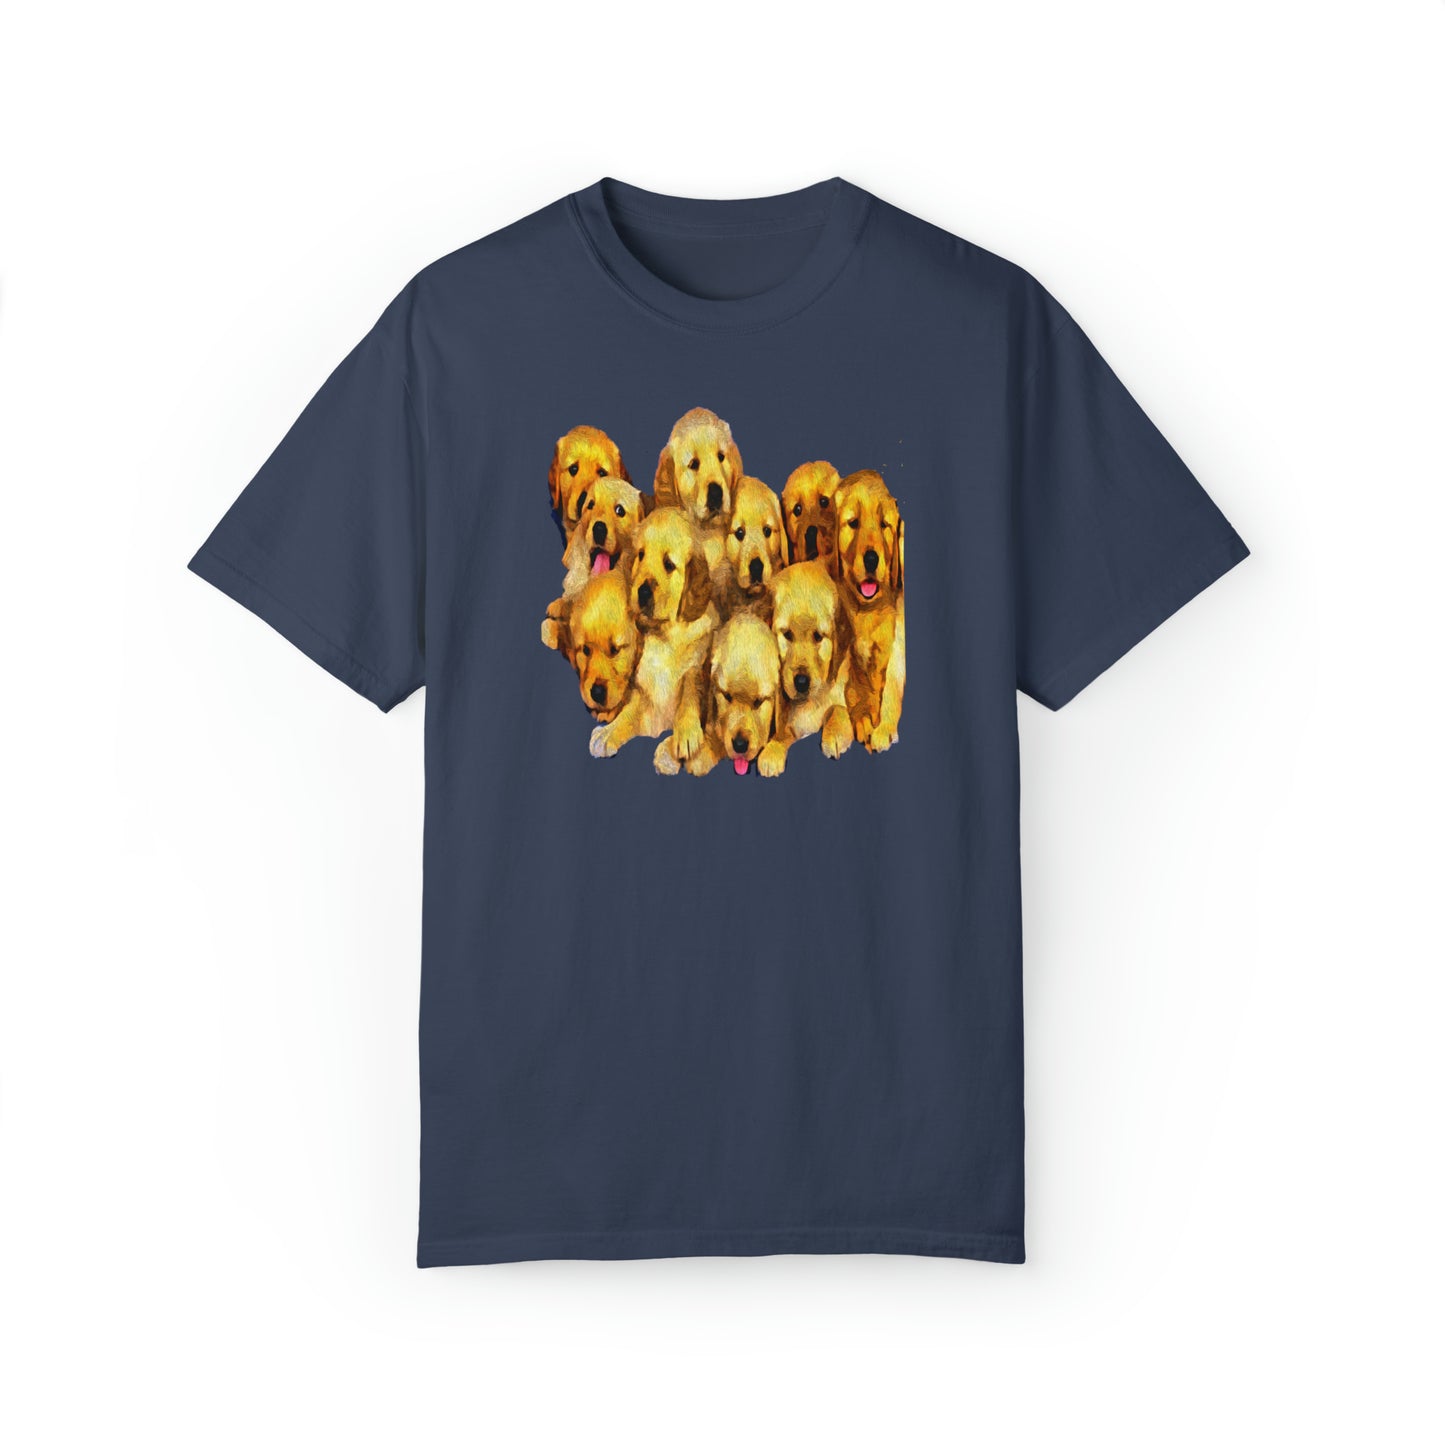 Golden Retriever Puppies Unisex-Adult Relaxed Fit Cotton Garment-Dyed T-shirt